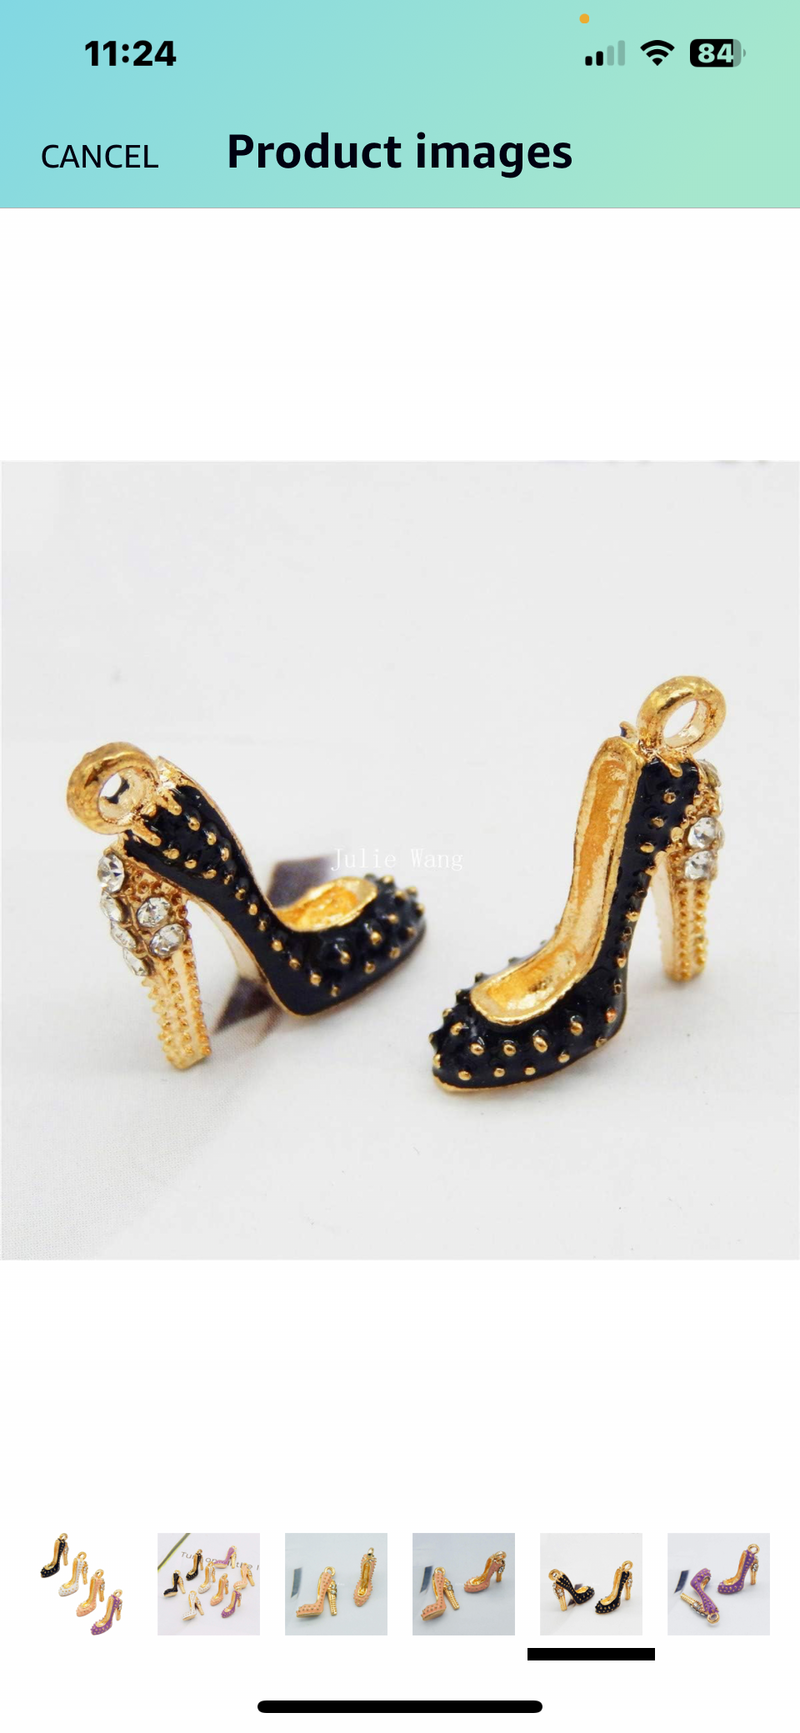 "Rhinestone High Heel Dress Shoe Charm - Glamour and Elegance in Two Striking Colors"